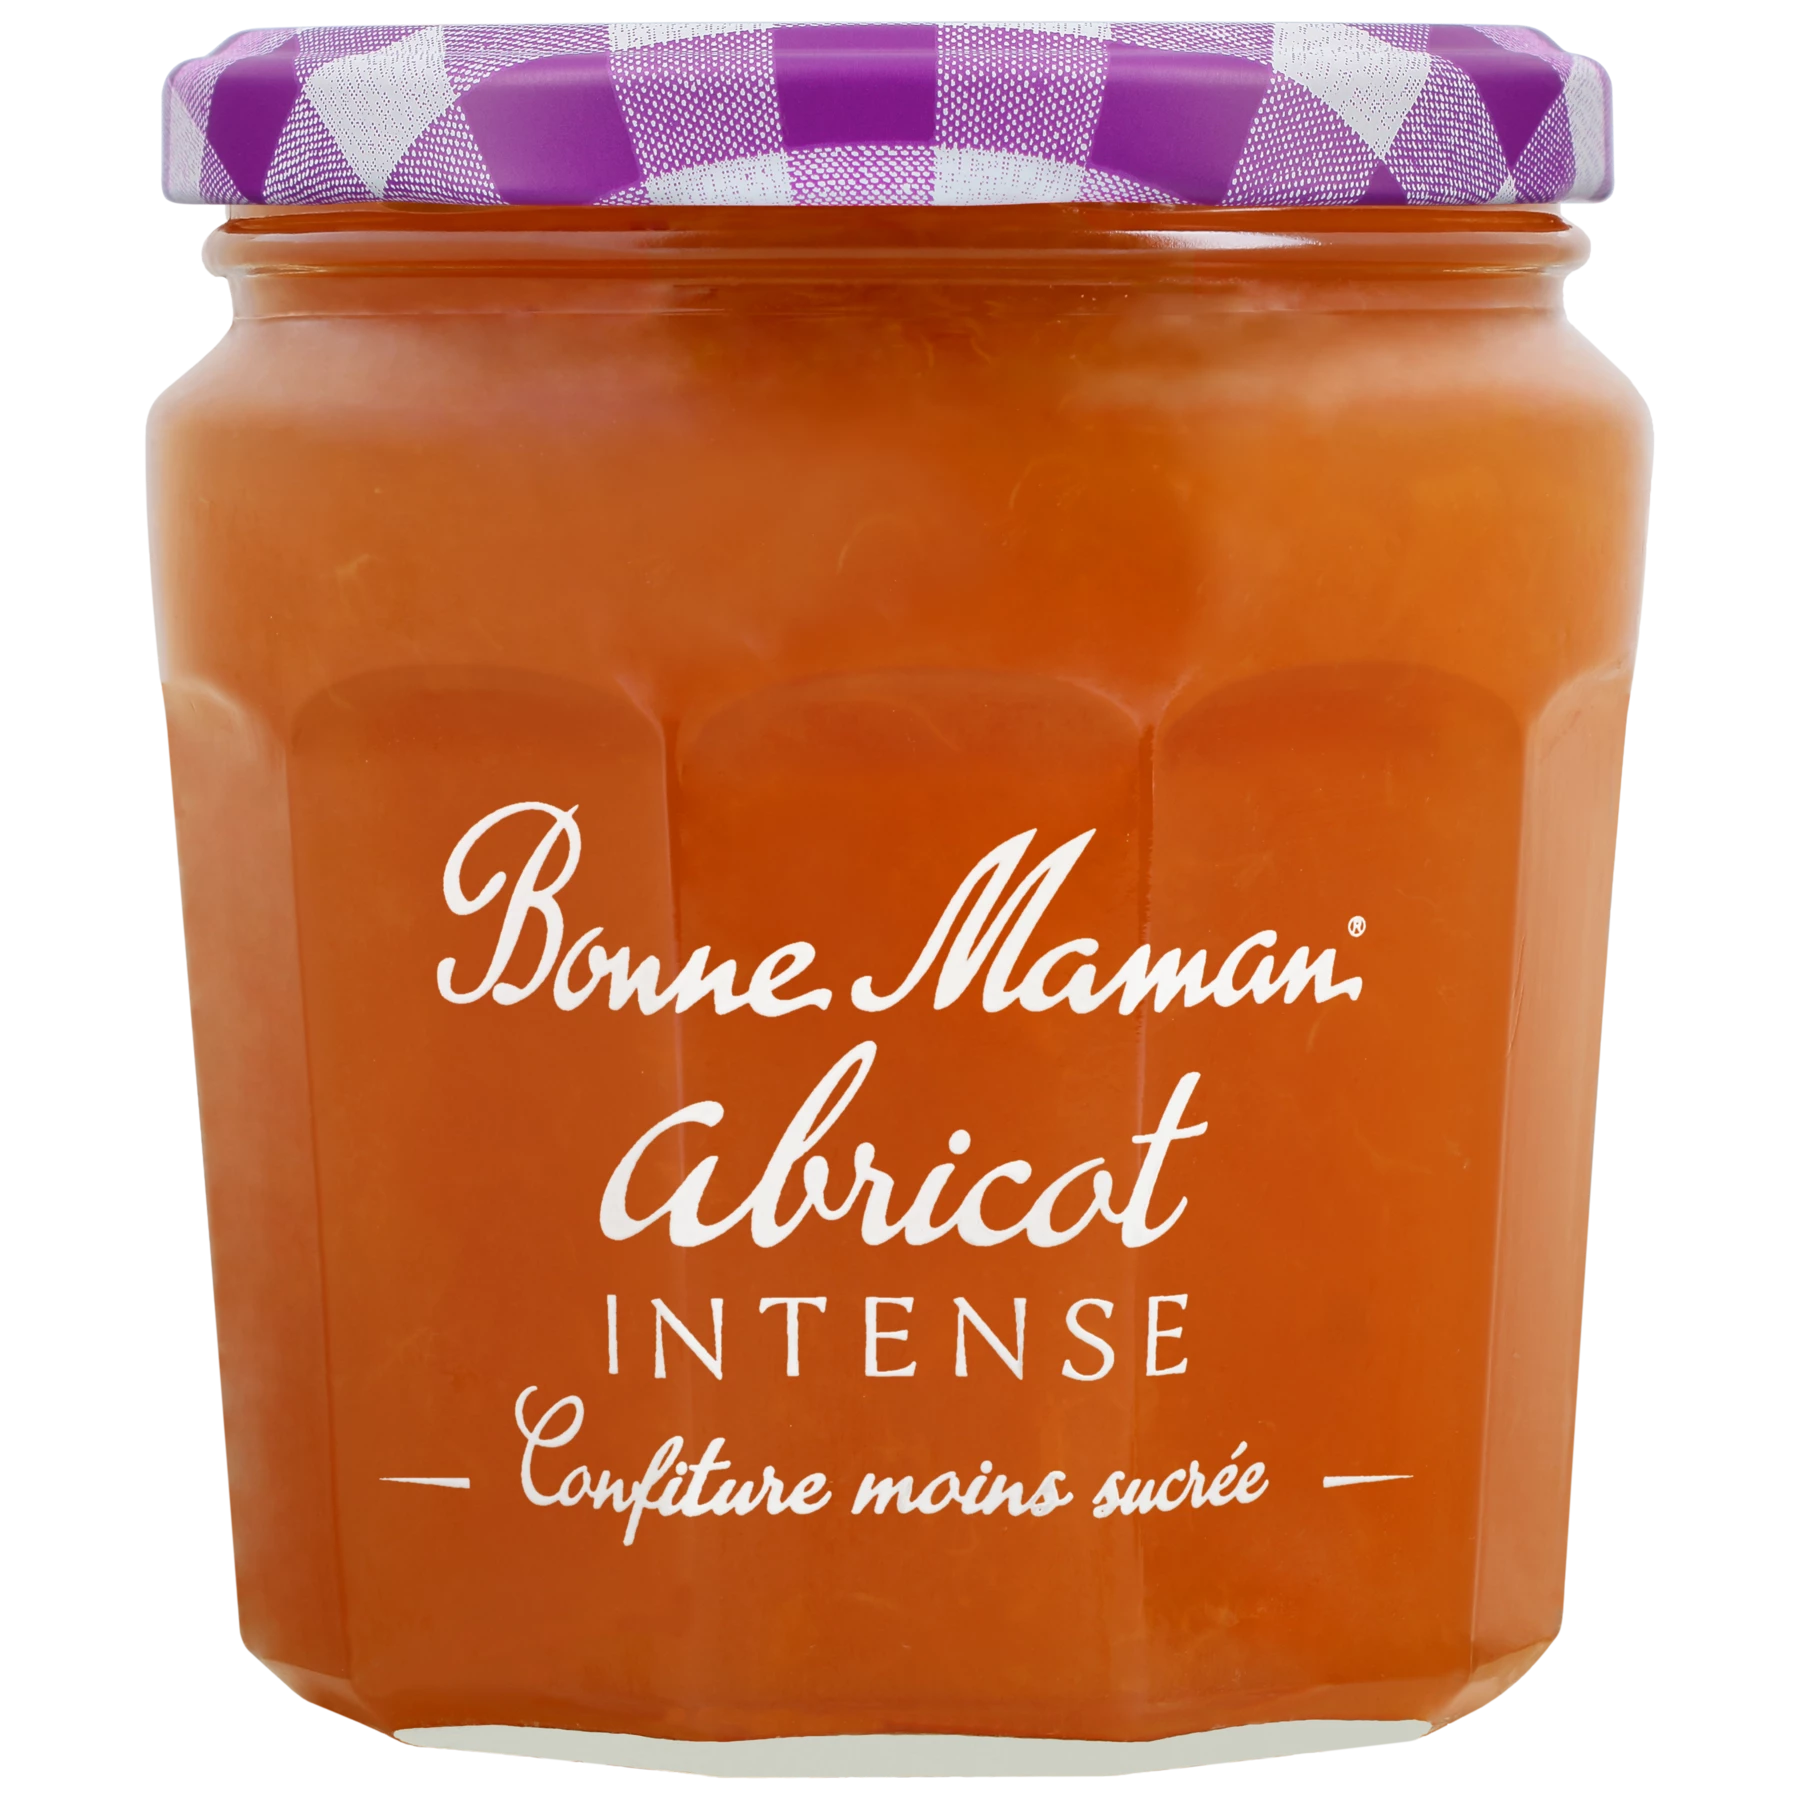 Confiture abricot intense 335g - BONNE MAMAN